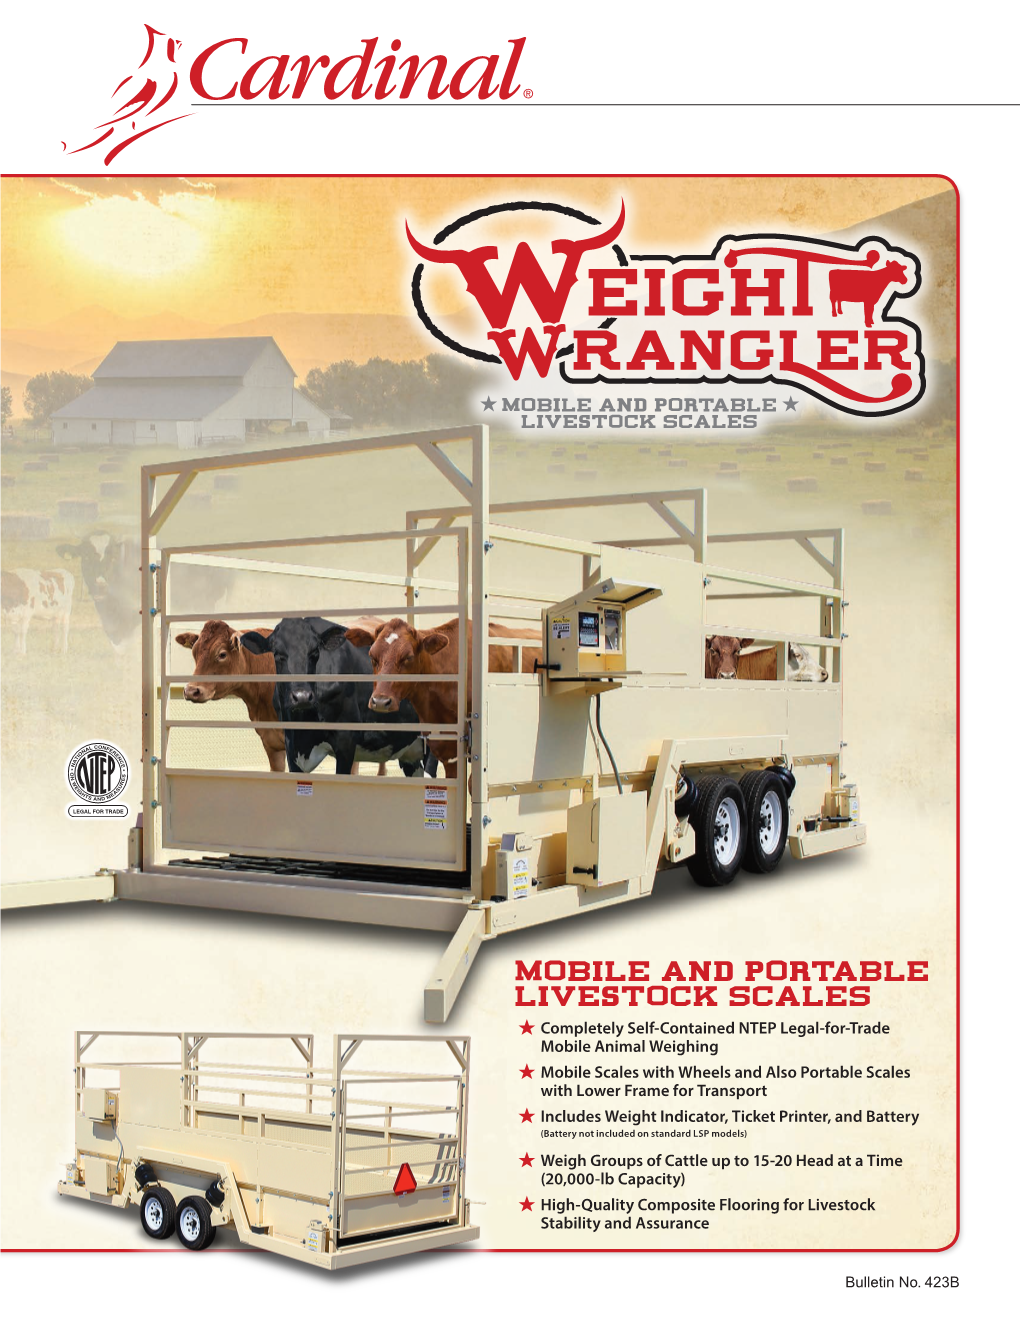 Cardinal Weight Wrangler Portable Livestock Scales